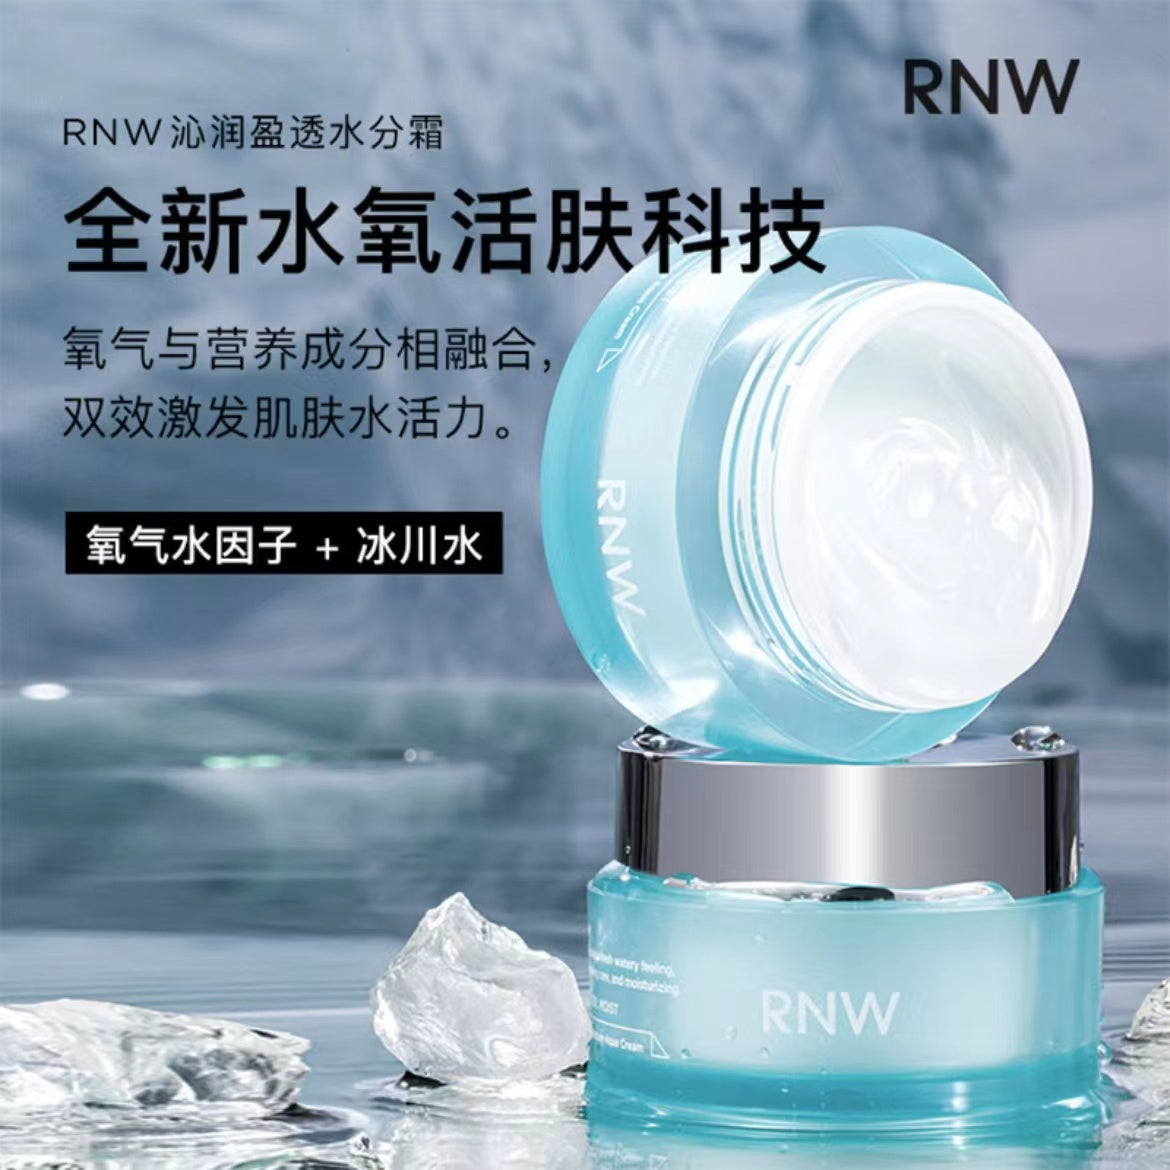 RNW Hyaluronic Acid Excellent Moisture Aqua Face Cream 50g 如薇盈透沁润水分霜